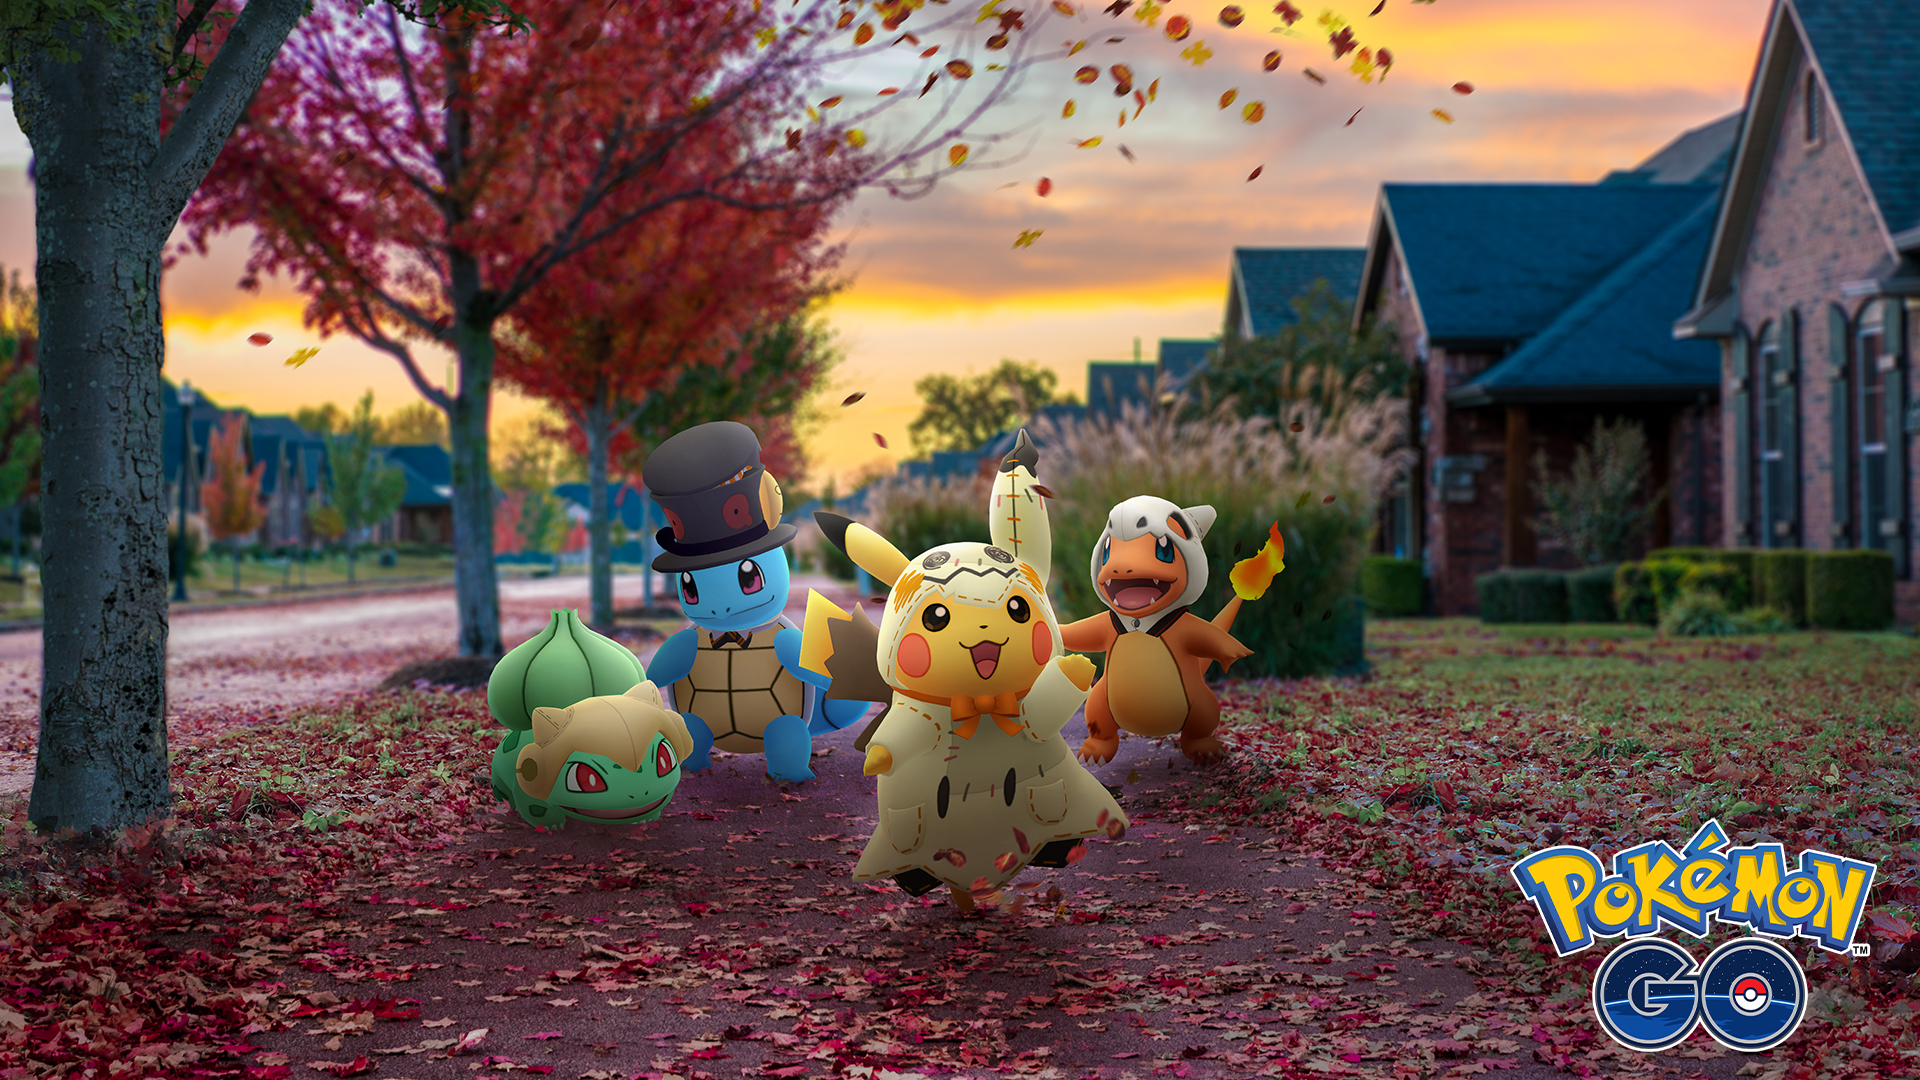 Pokemon Go Halloween 2019 Event Brings Darkrai Raids And New Shiny Pokemon